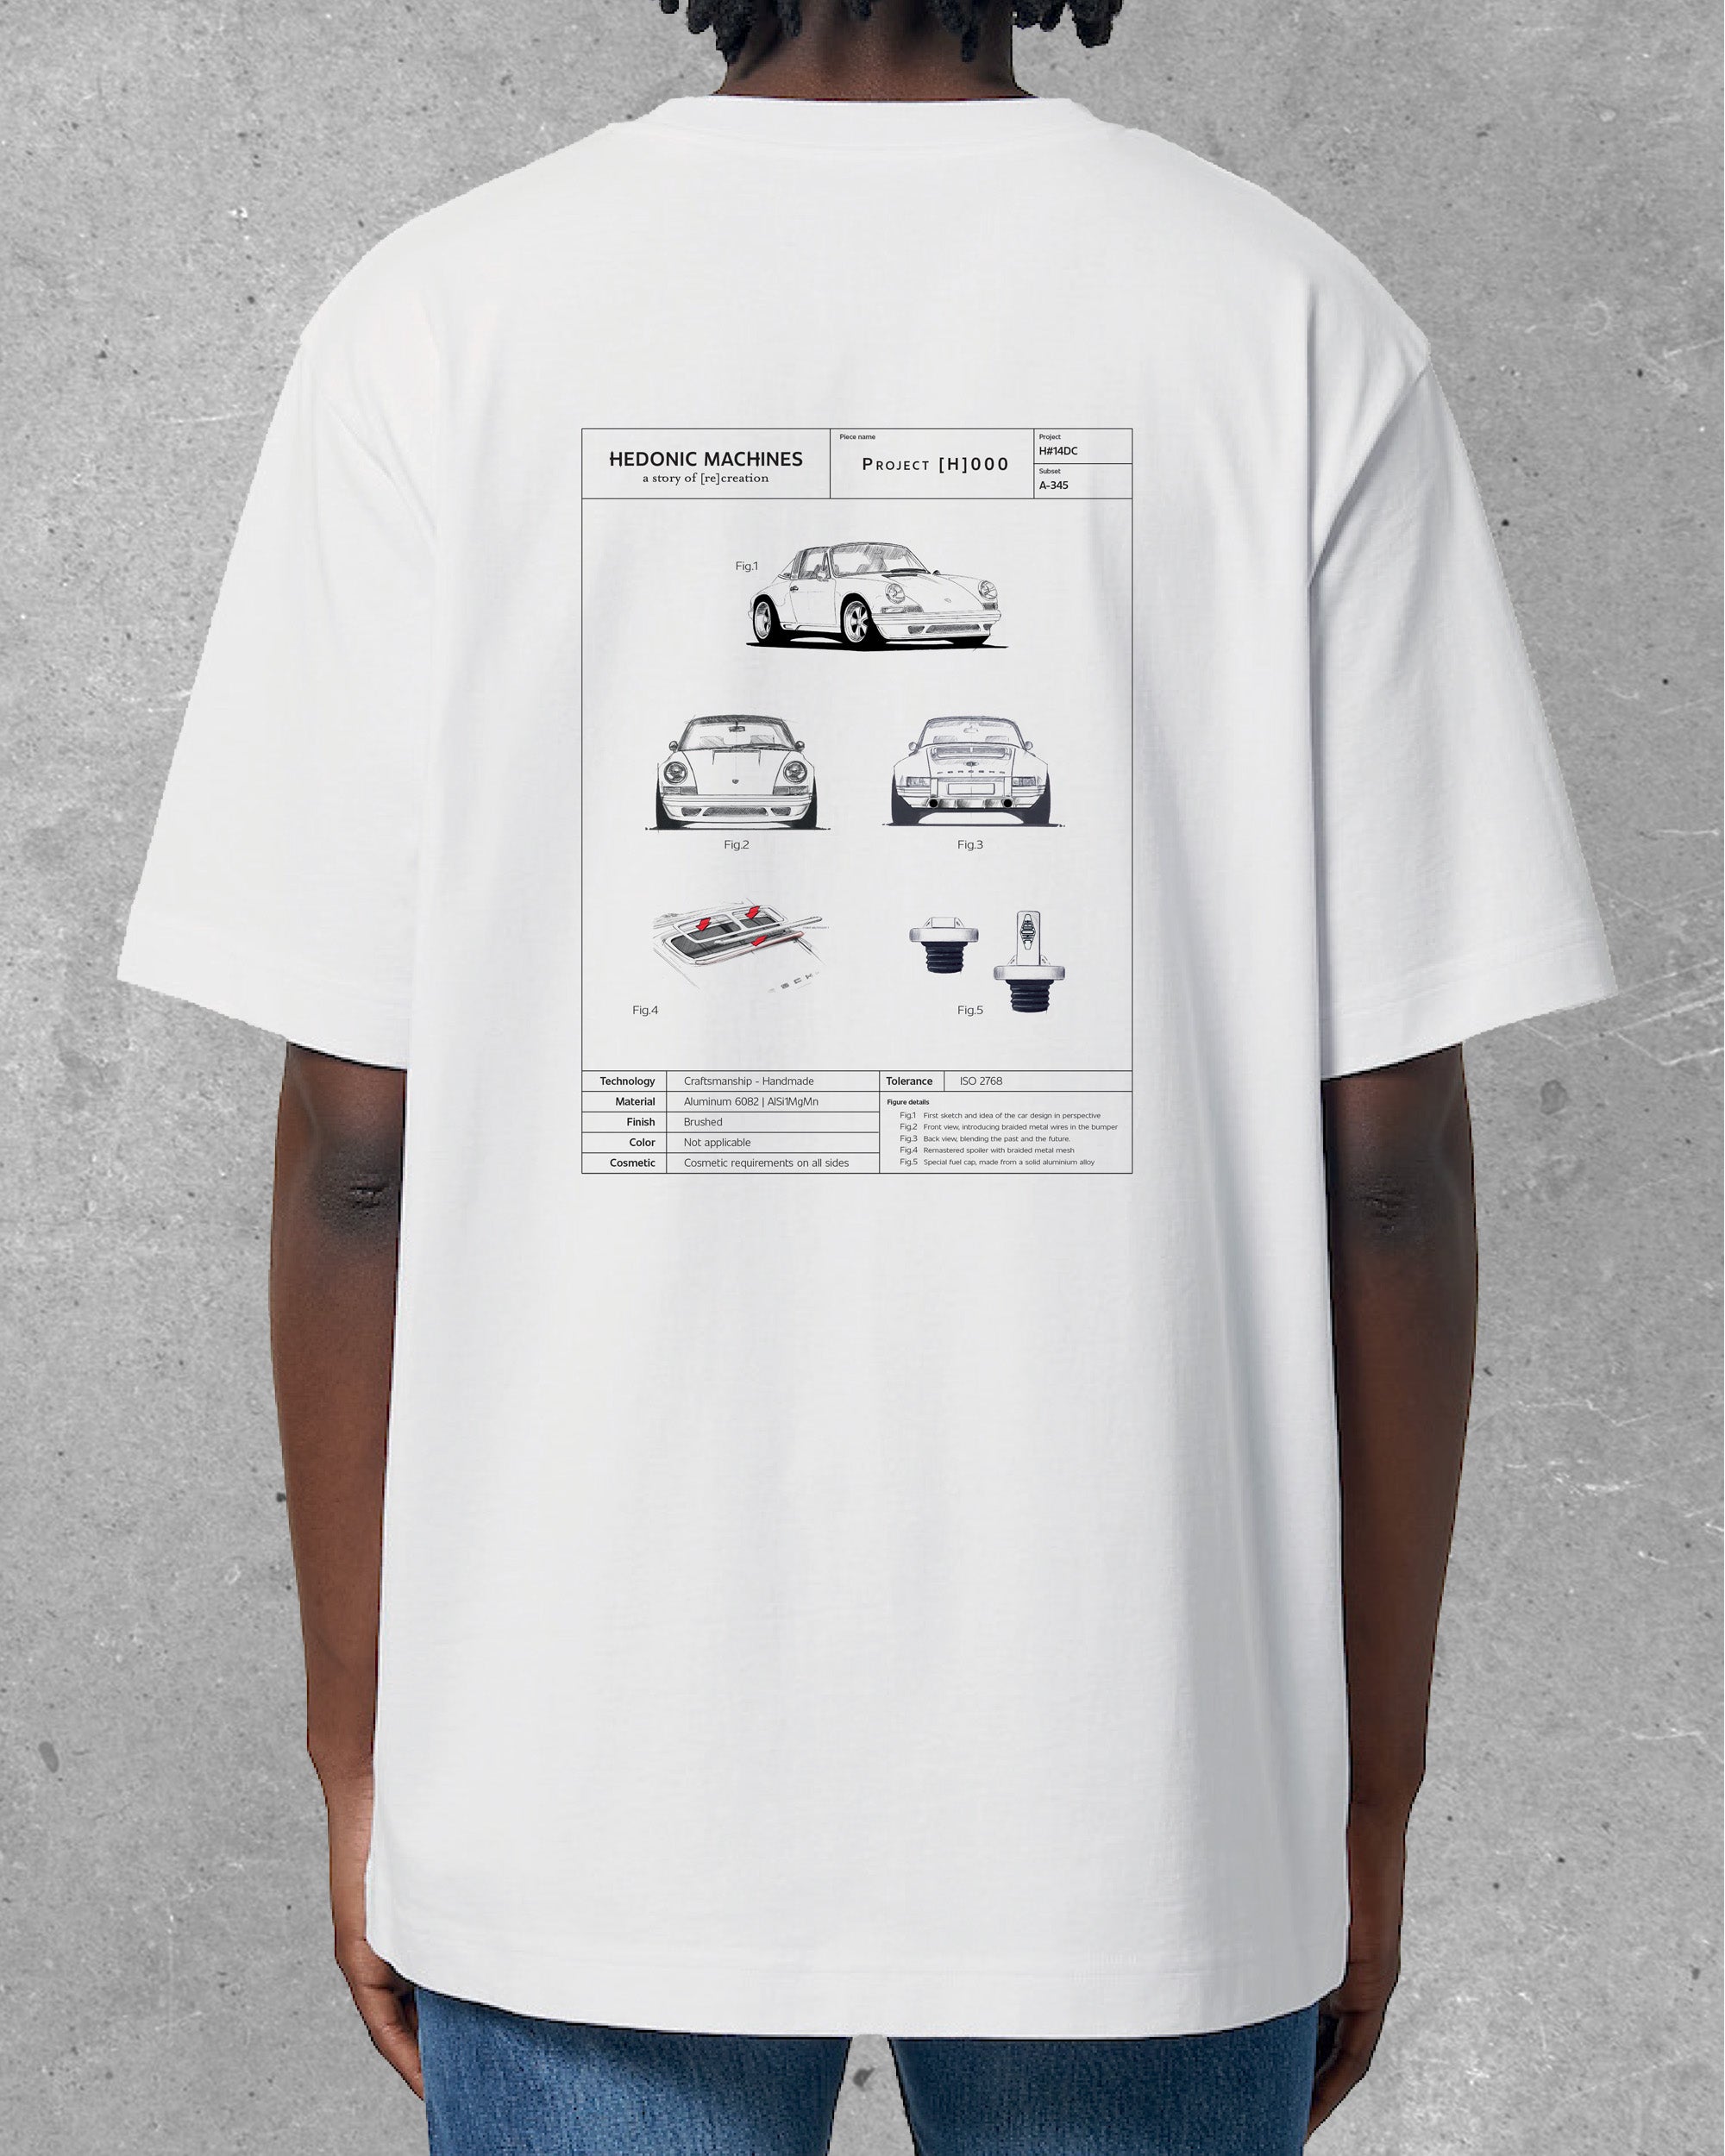 White T-Shirt - [H]000 Data sheet